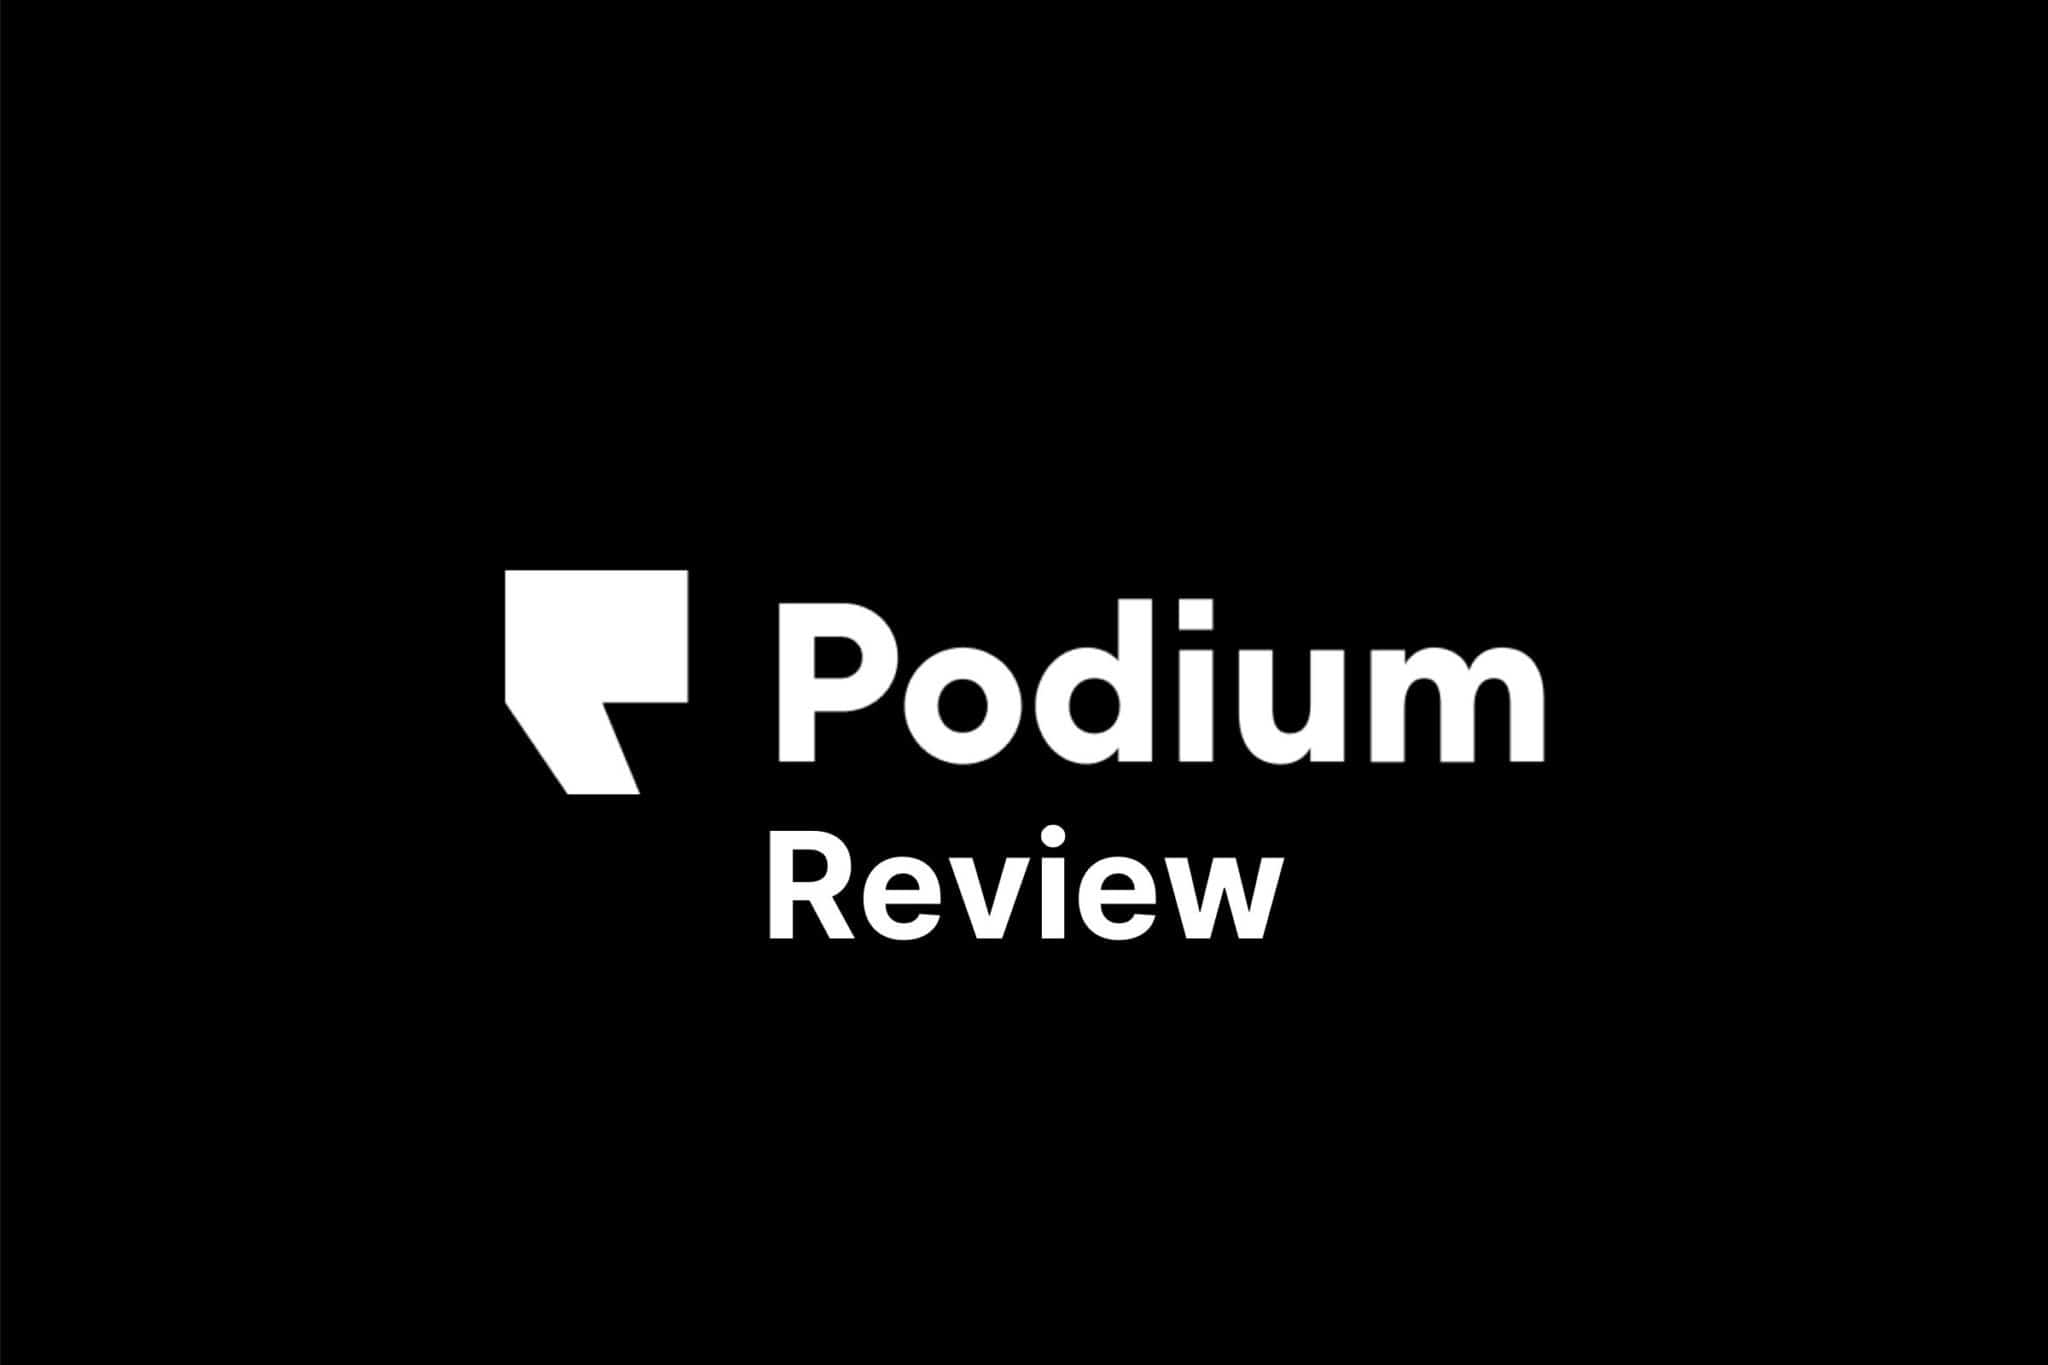 Review of Podium